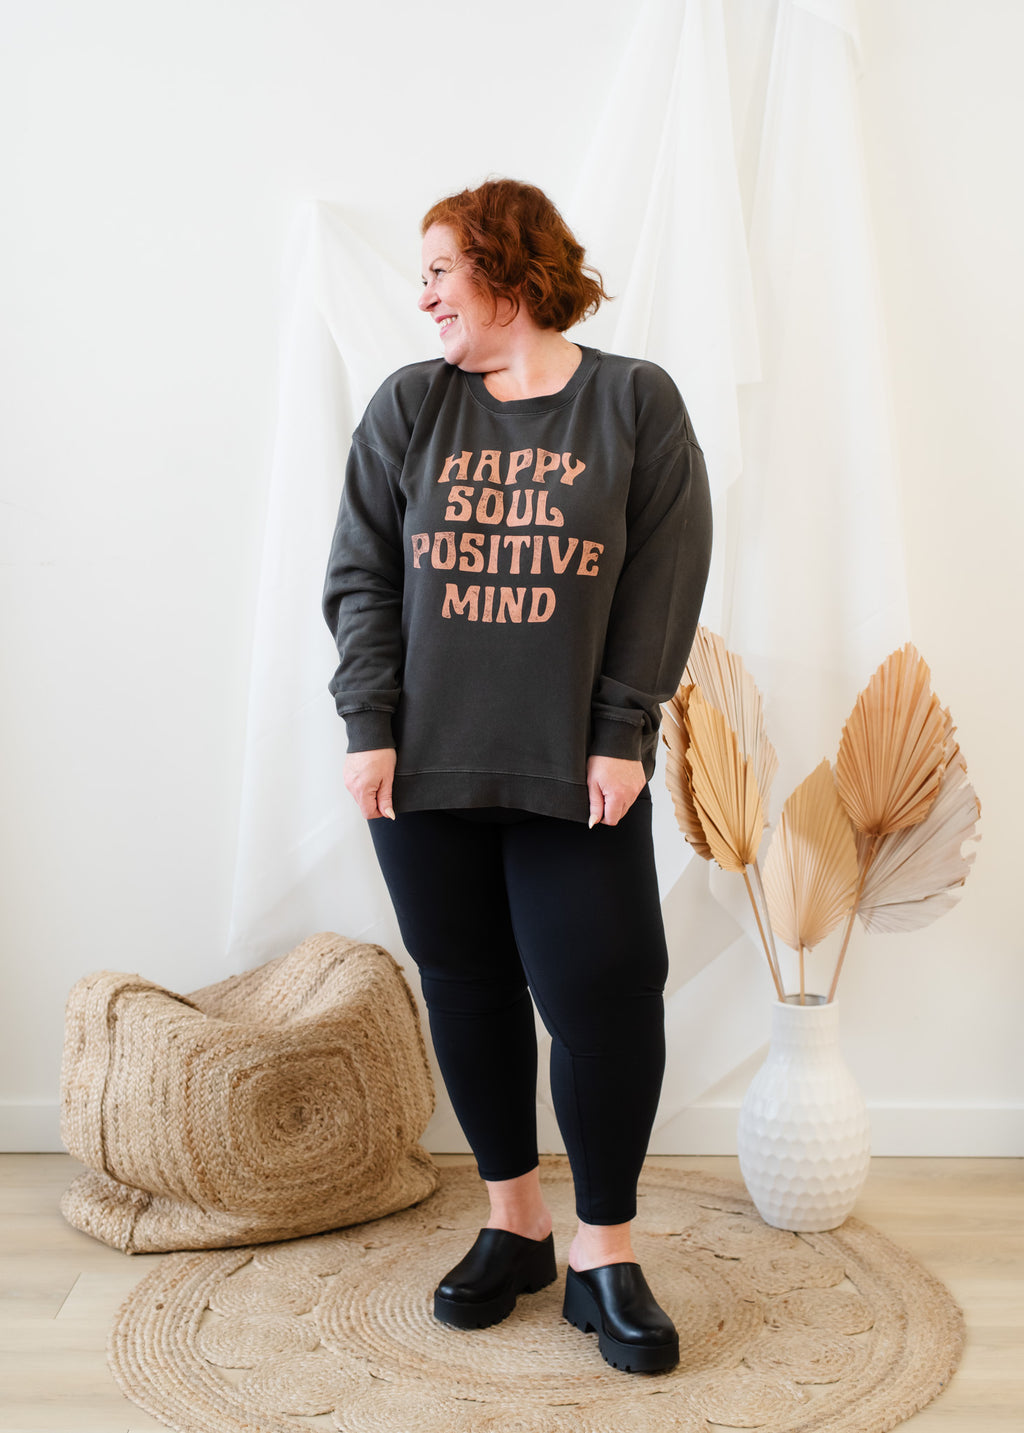 The Happy Soul, Positive Mind Sweatshirt